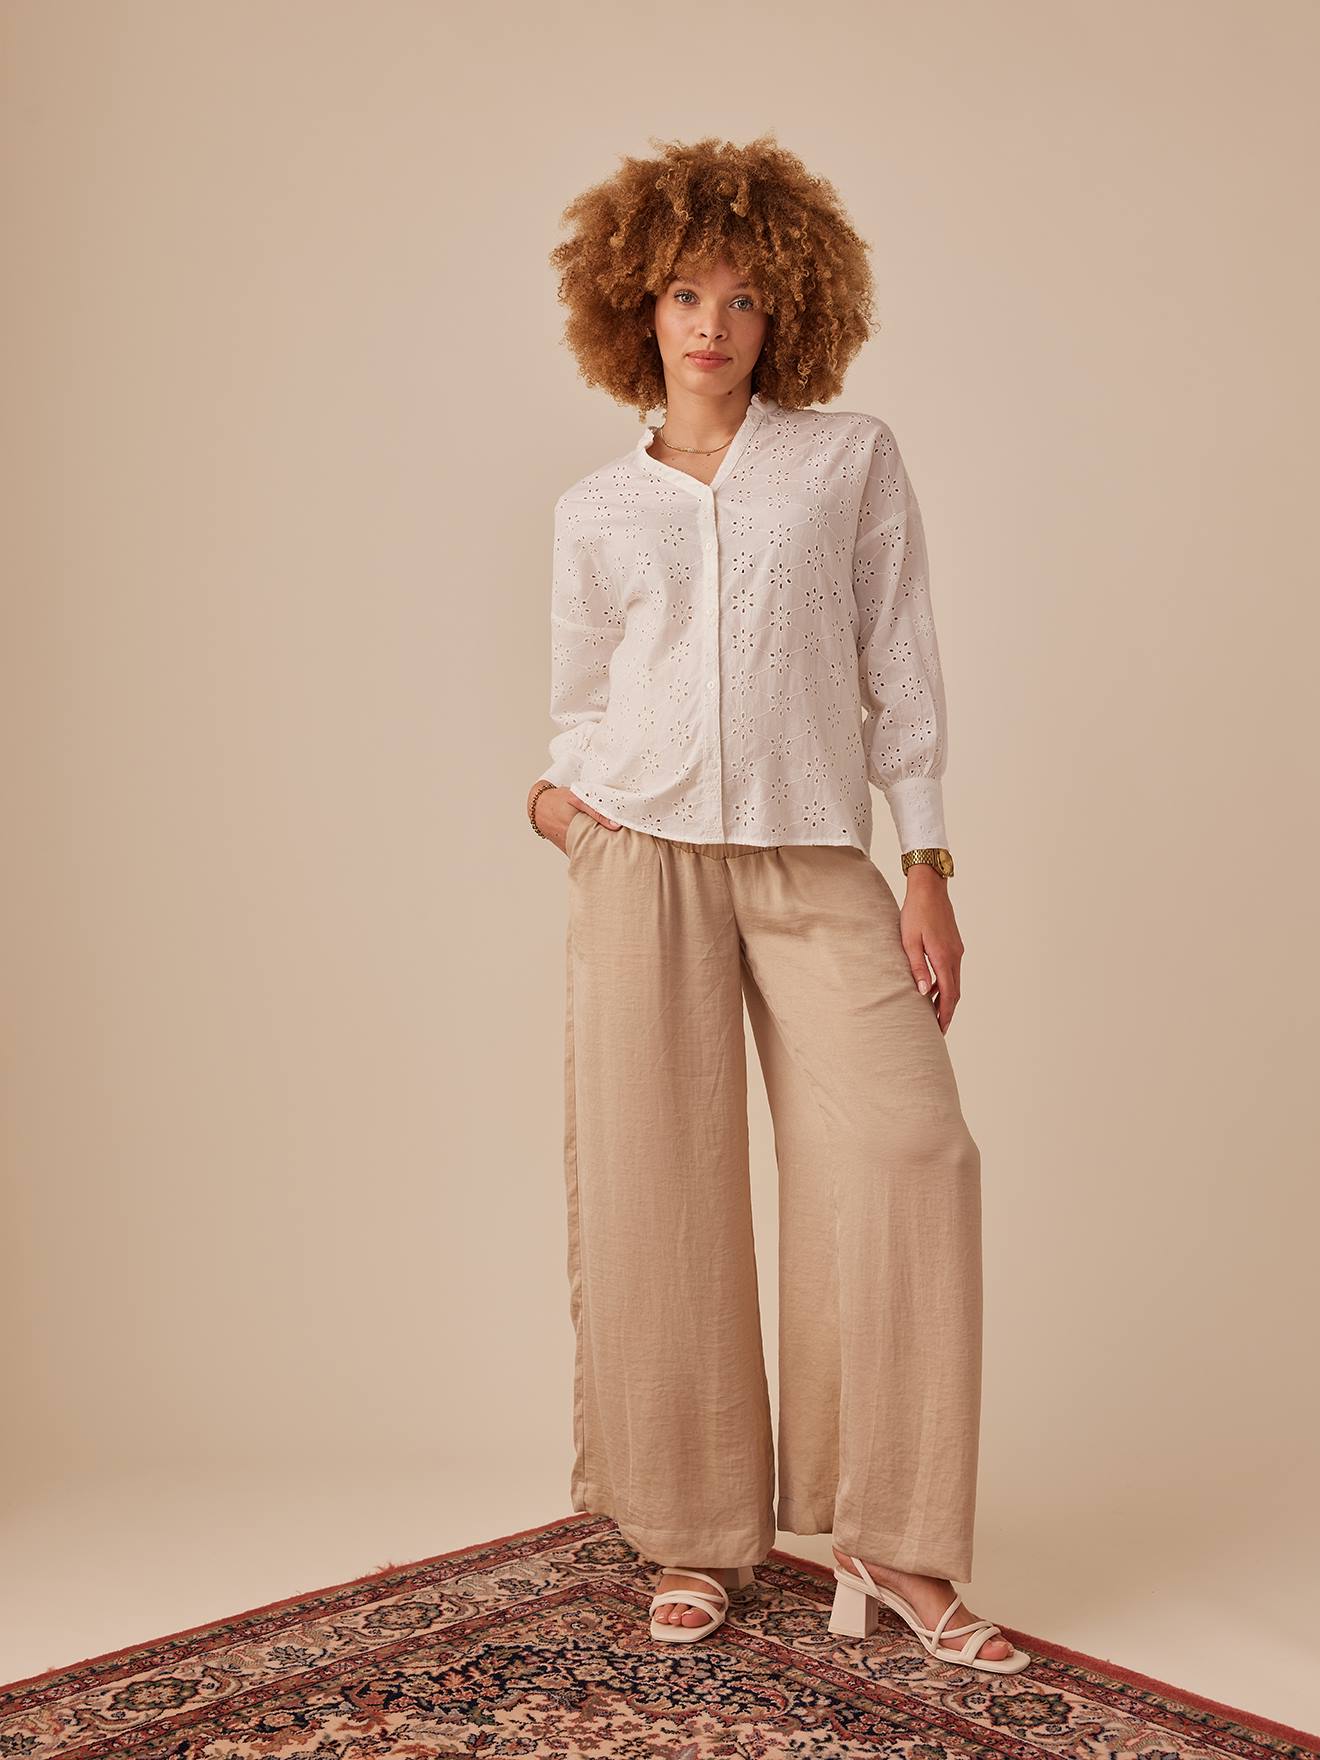 Palazzo-Style Fluid Trousers for Maternity, by ENVIE DE FRAISE sandy beige